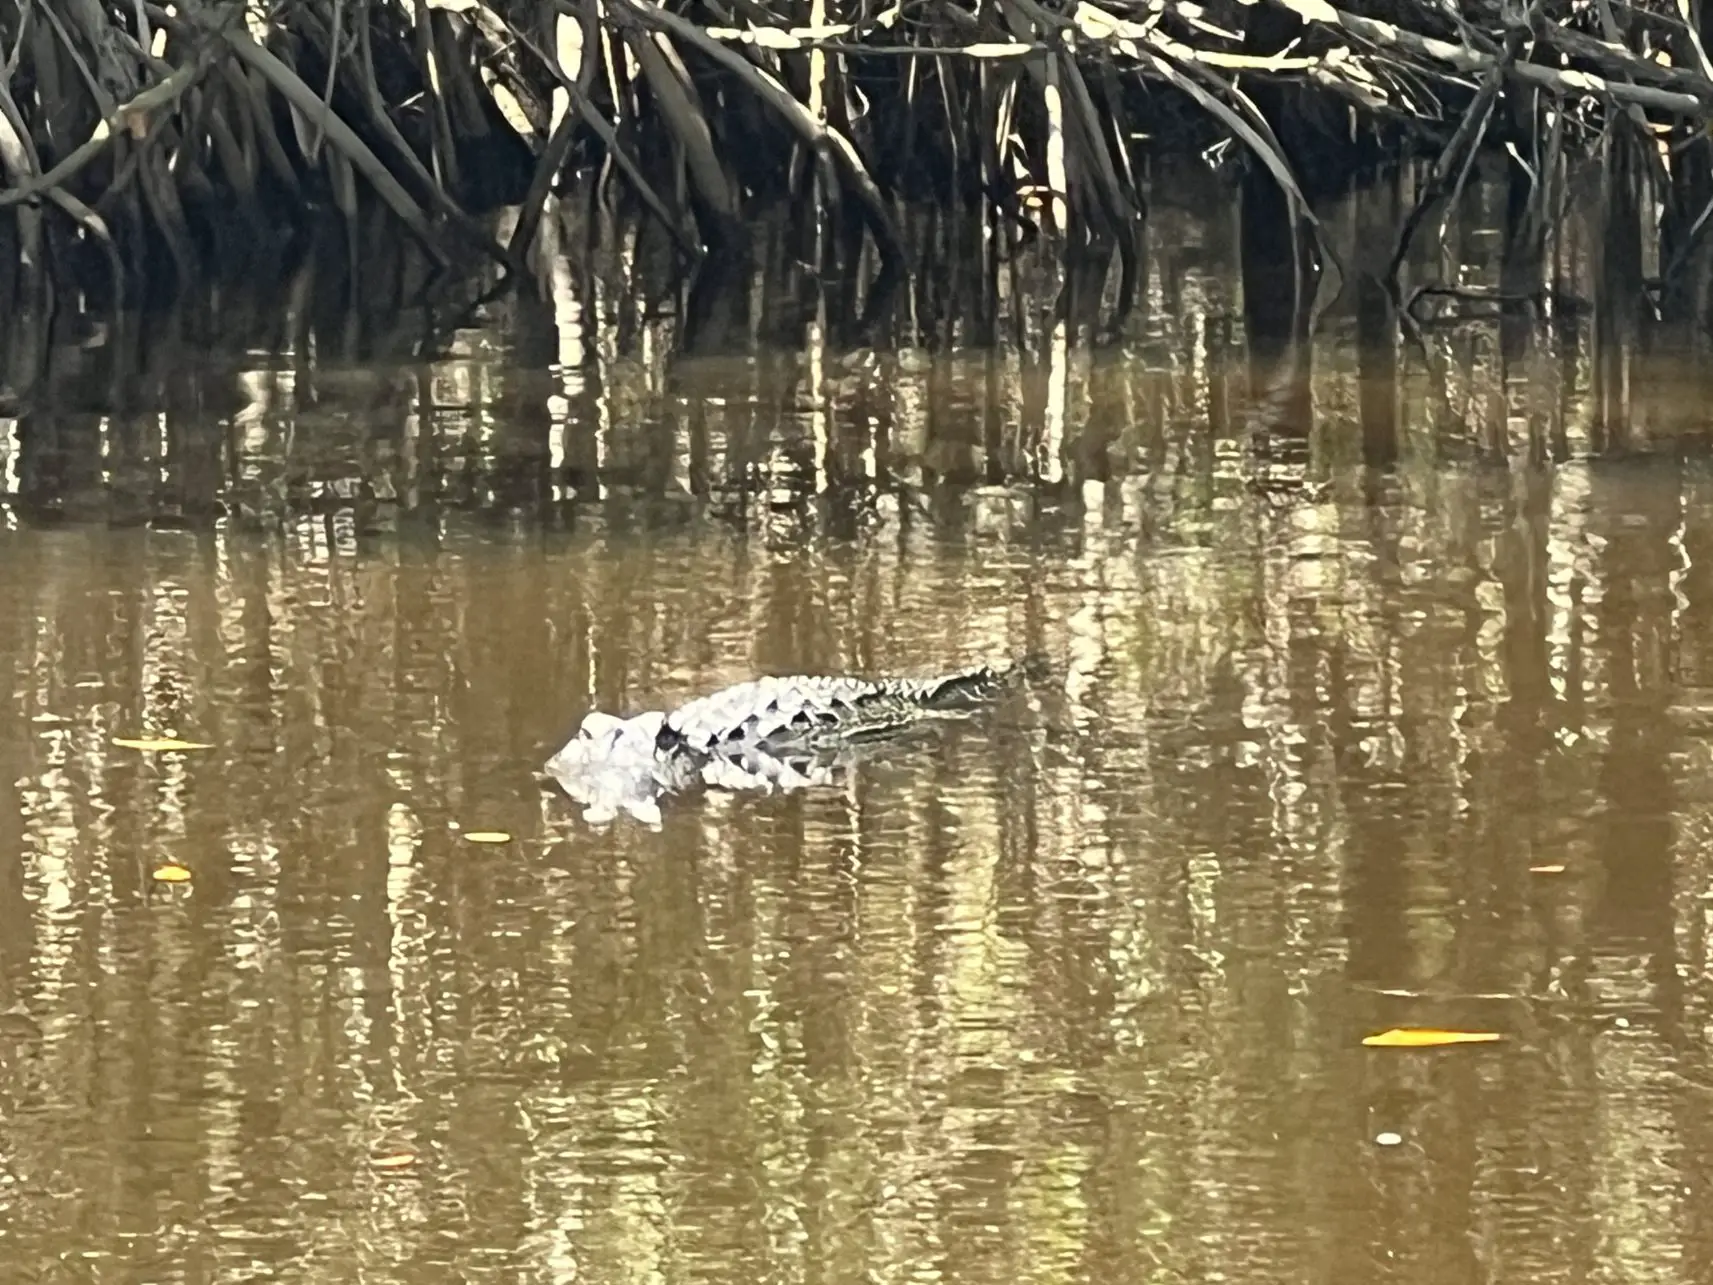 Alligator in the Everglades in Florida, USA.